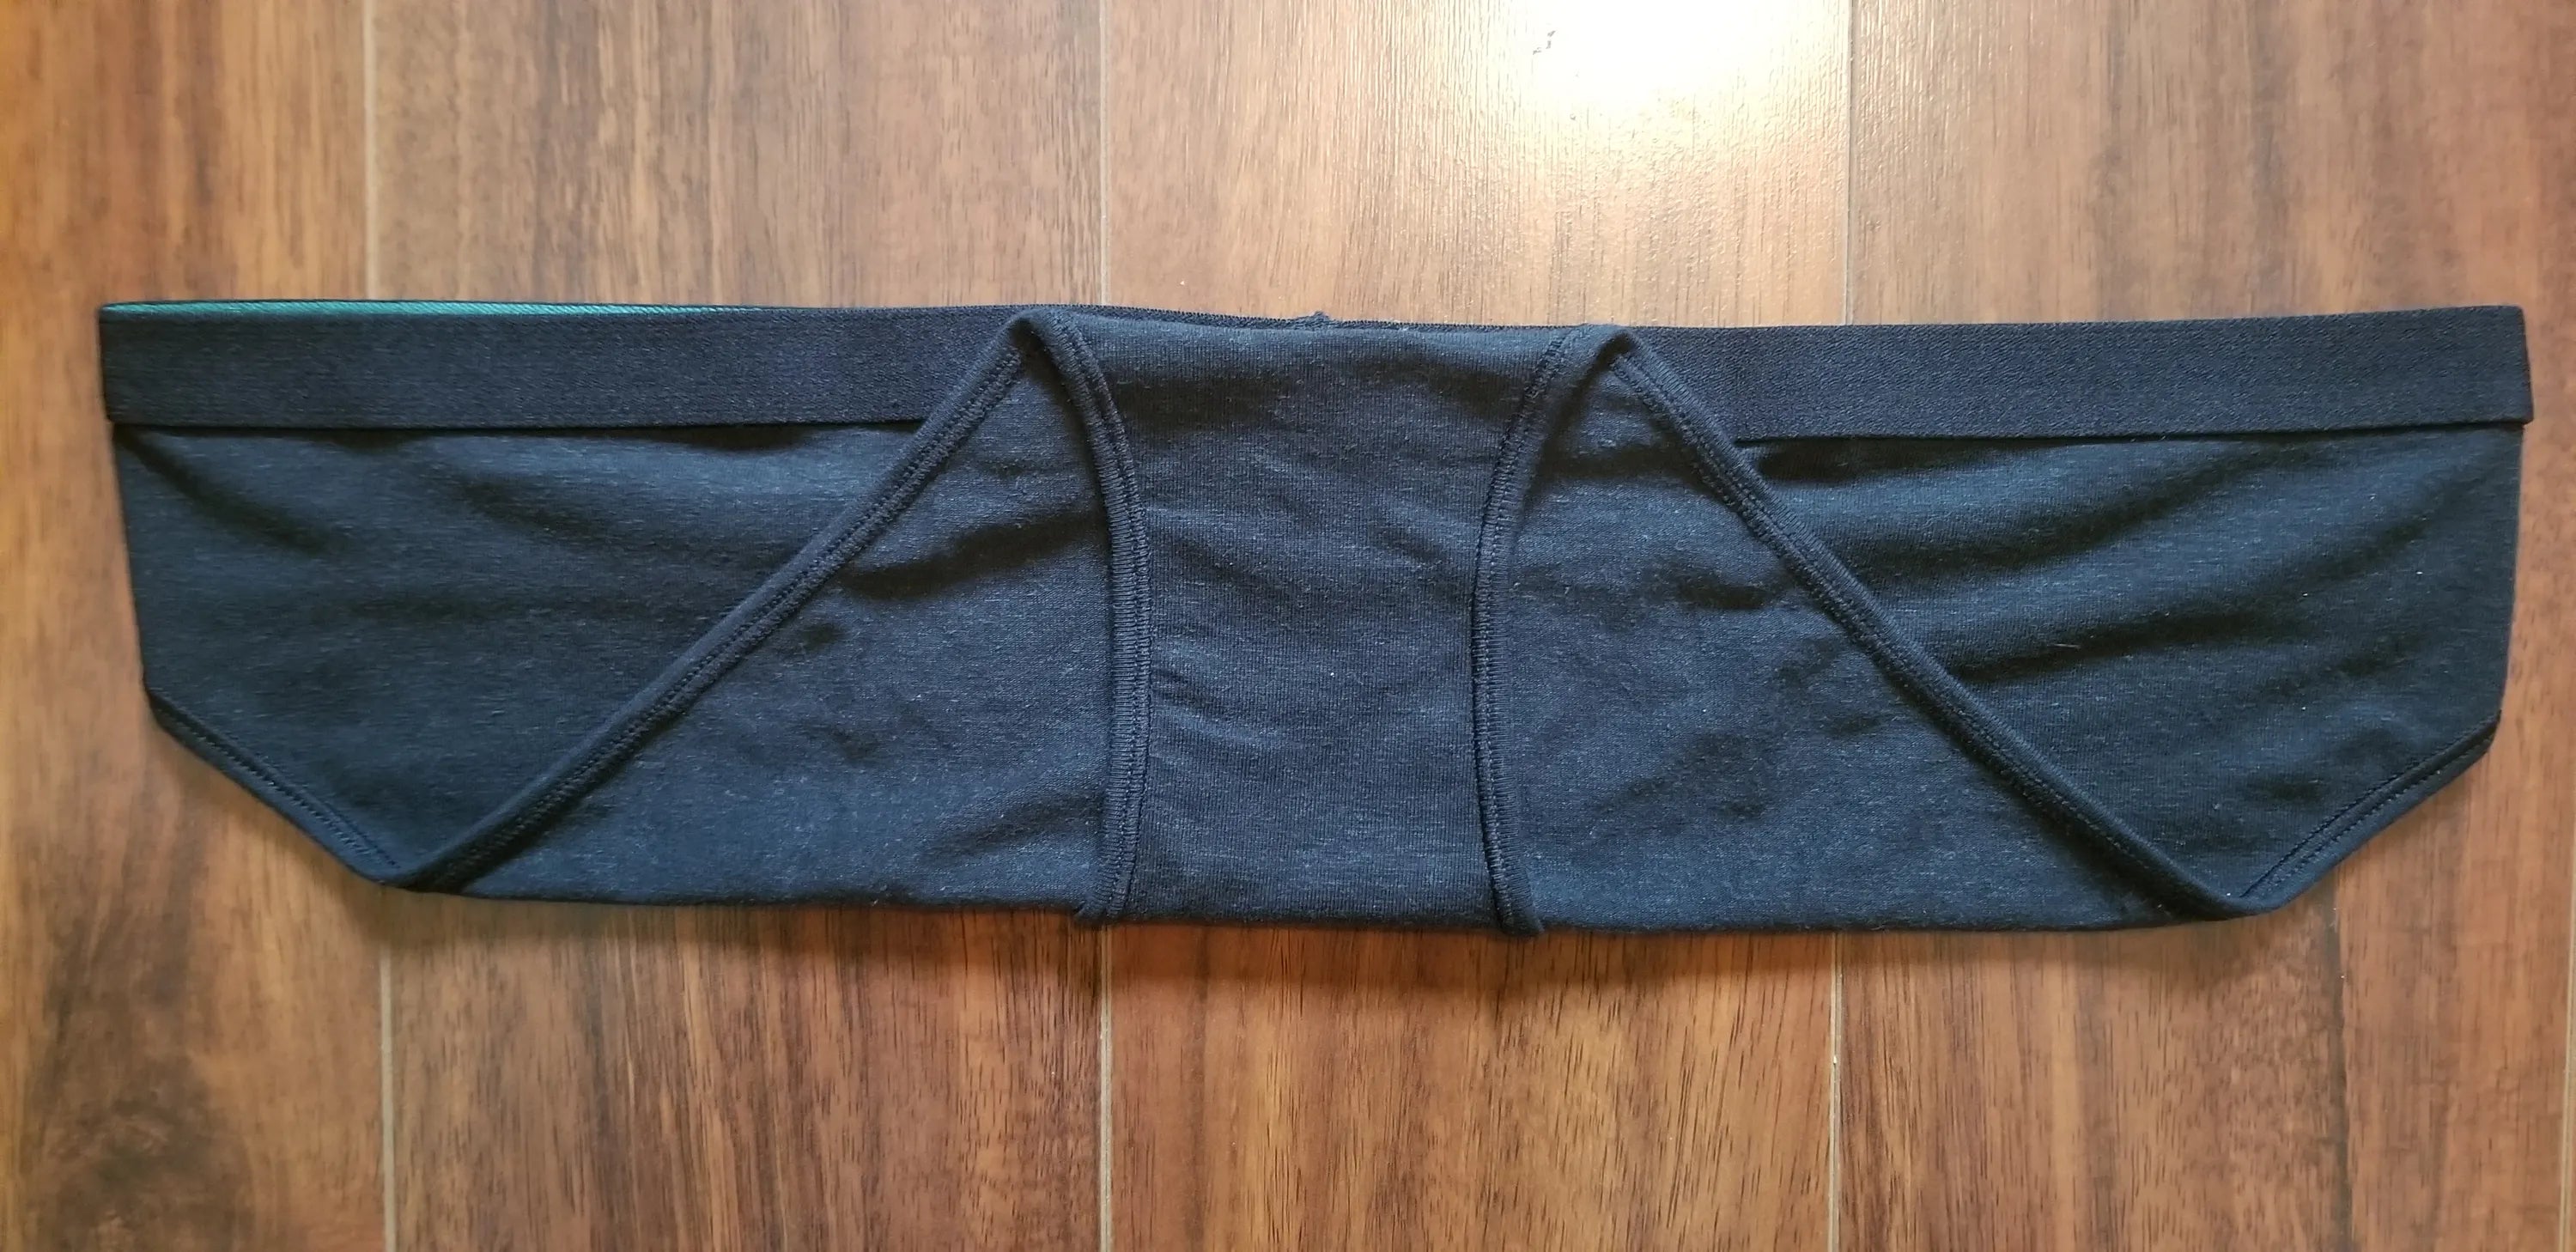 6 Tips On How To Fold Underwear – WAMA Underwear